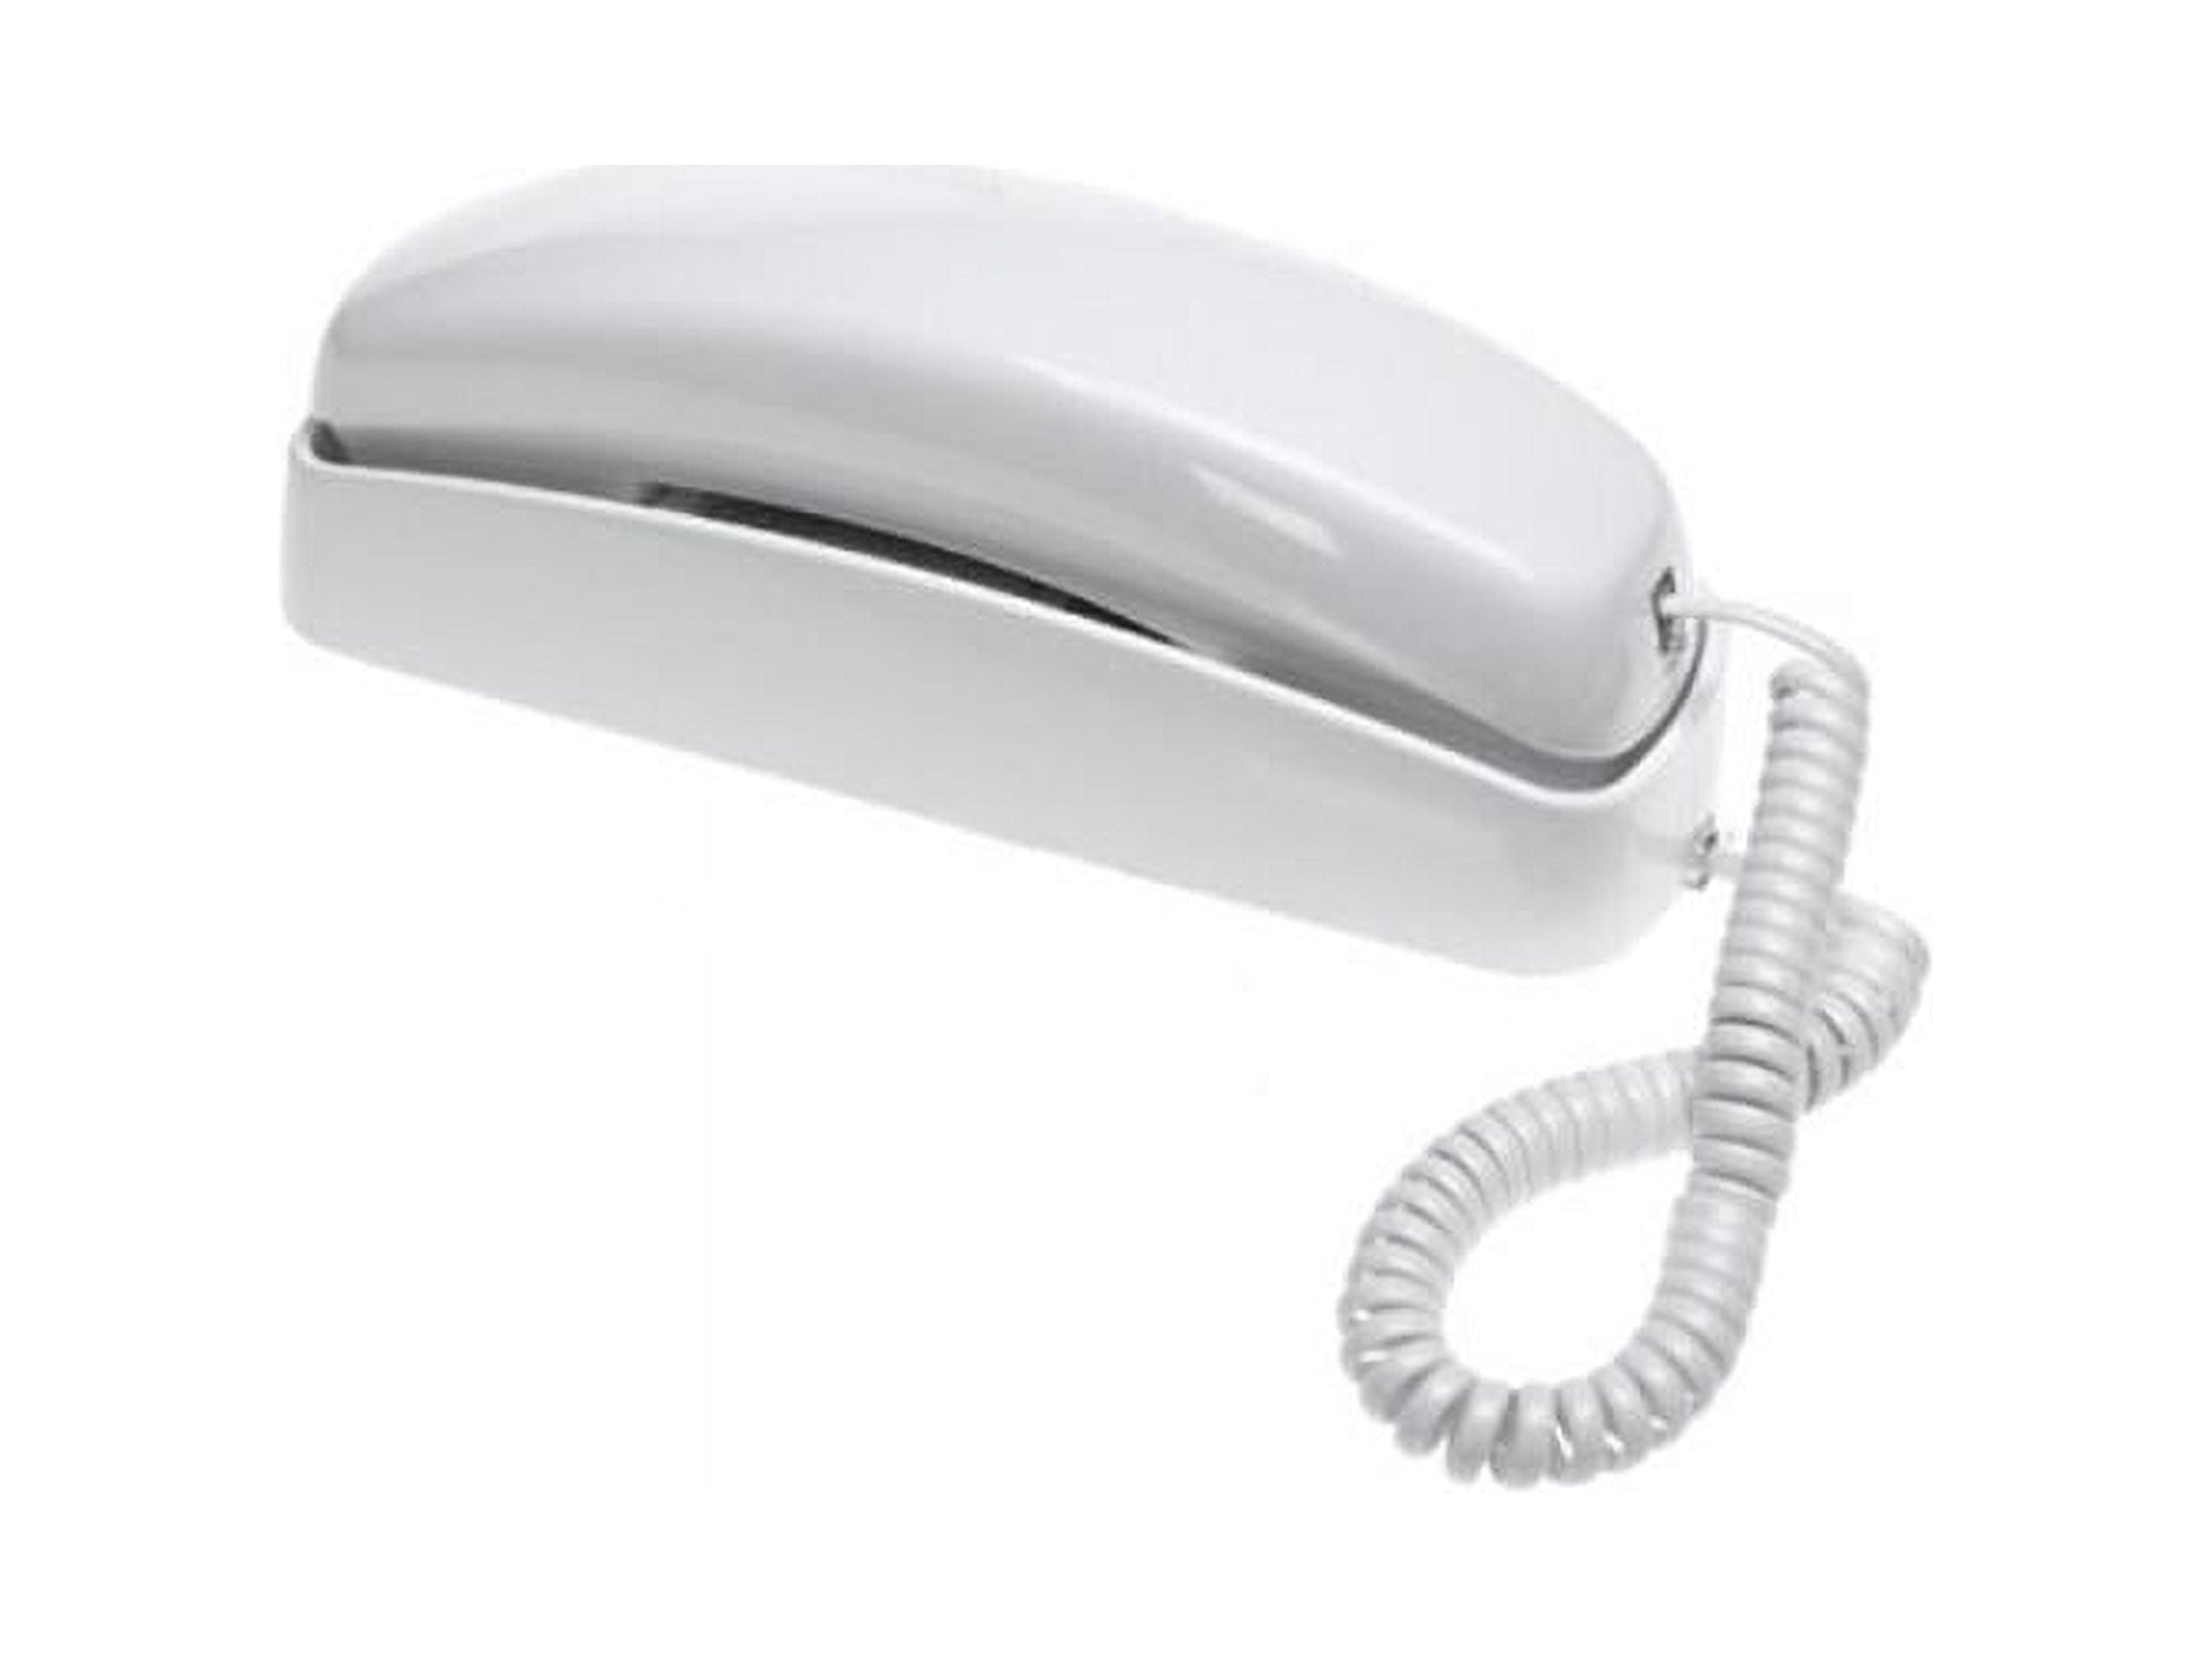 AT&T Vtech Communications 210 Trimline Telephone, White